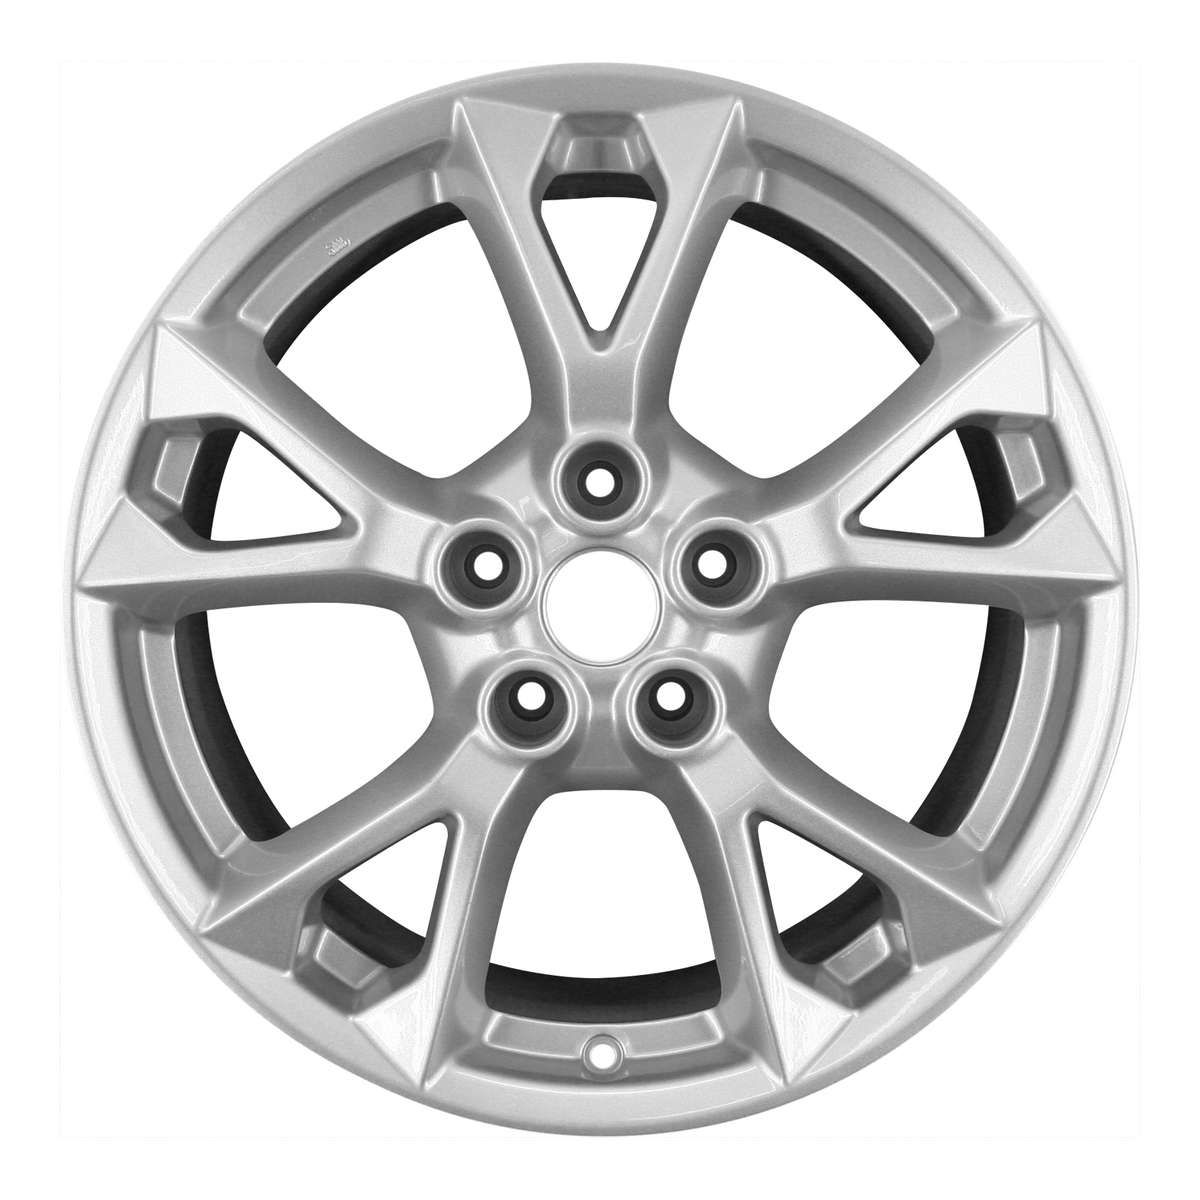 2014 Nissan Maxima New 18" Replacement Wheel Rim RW62582S